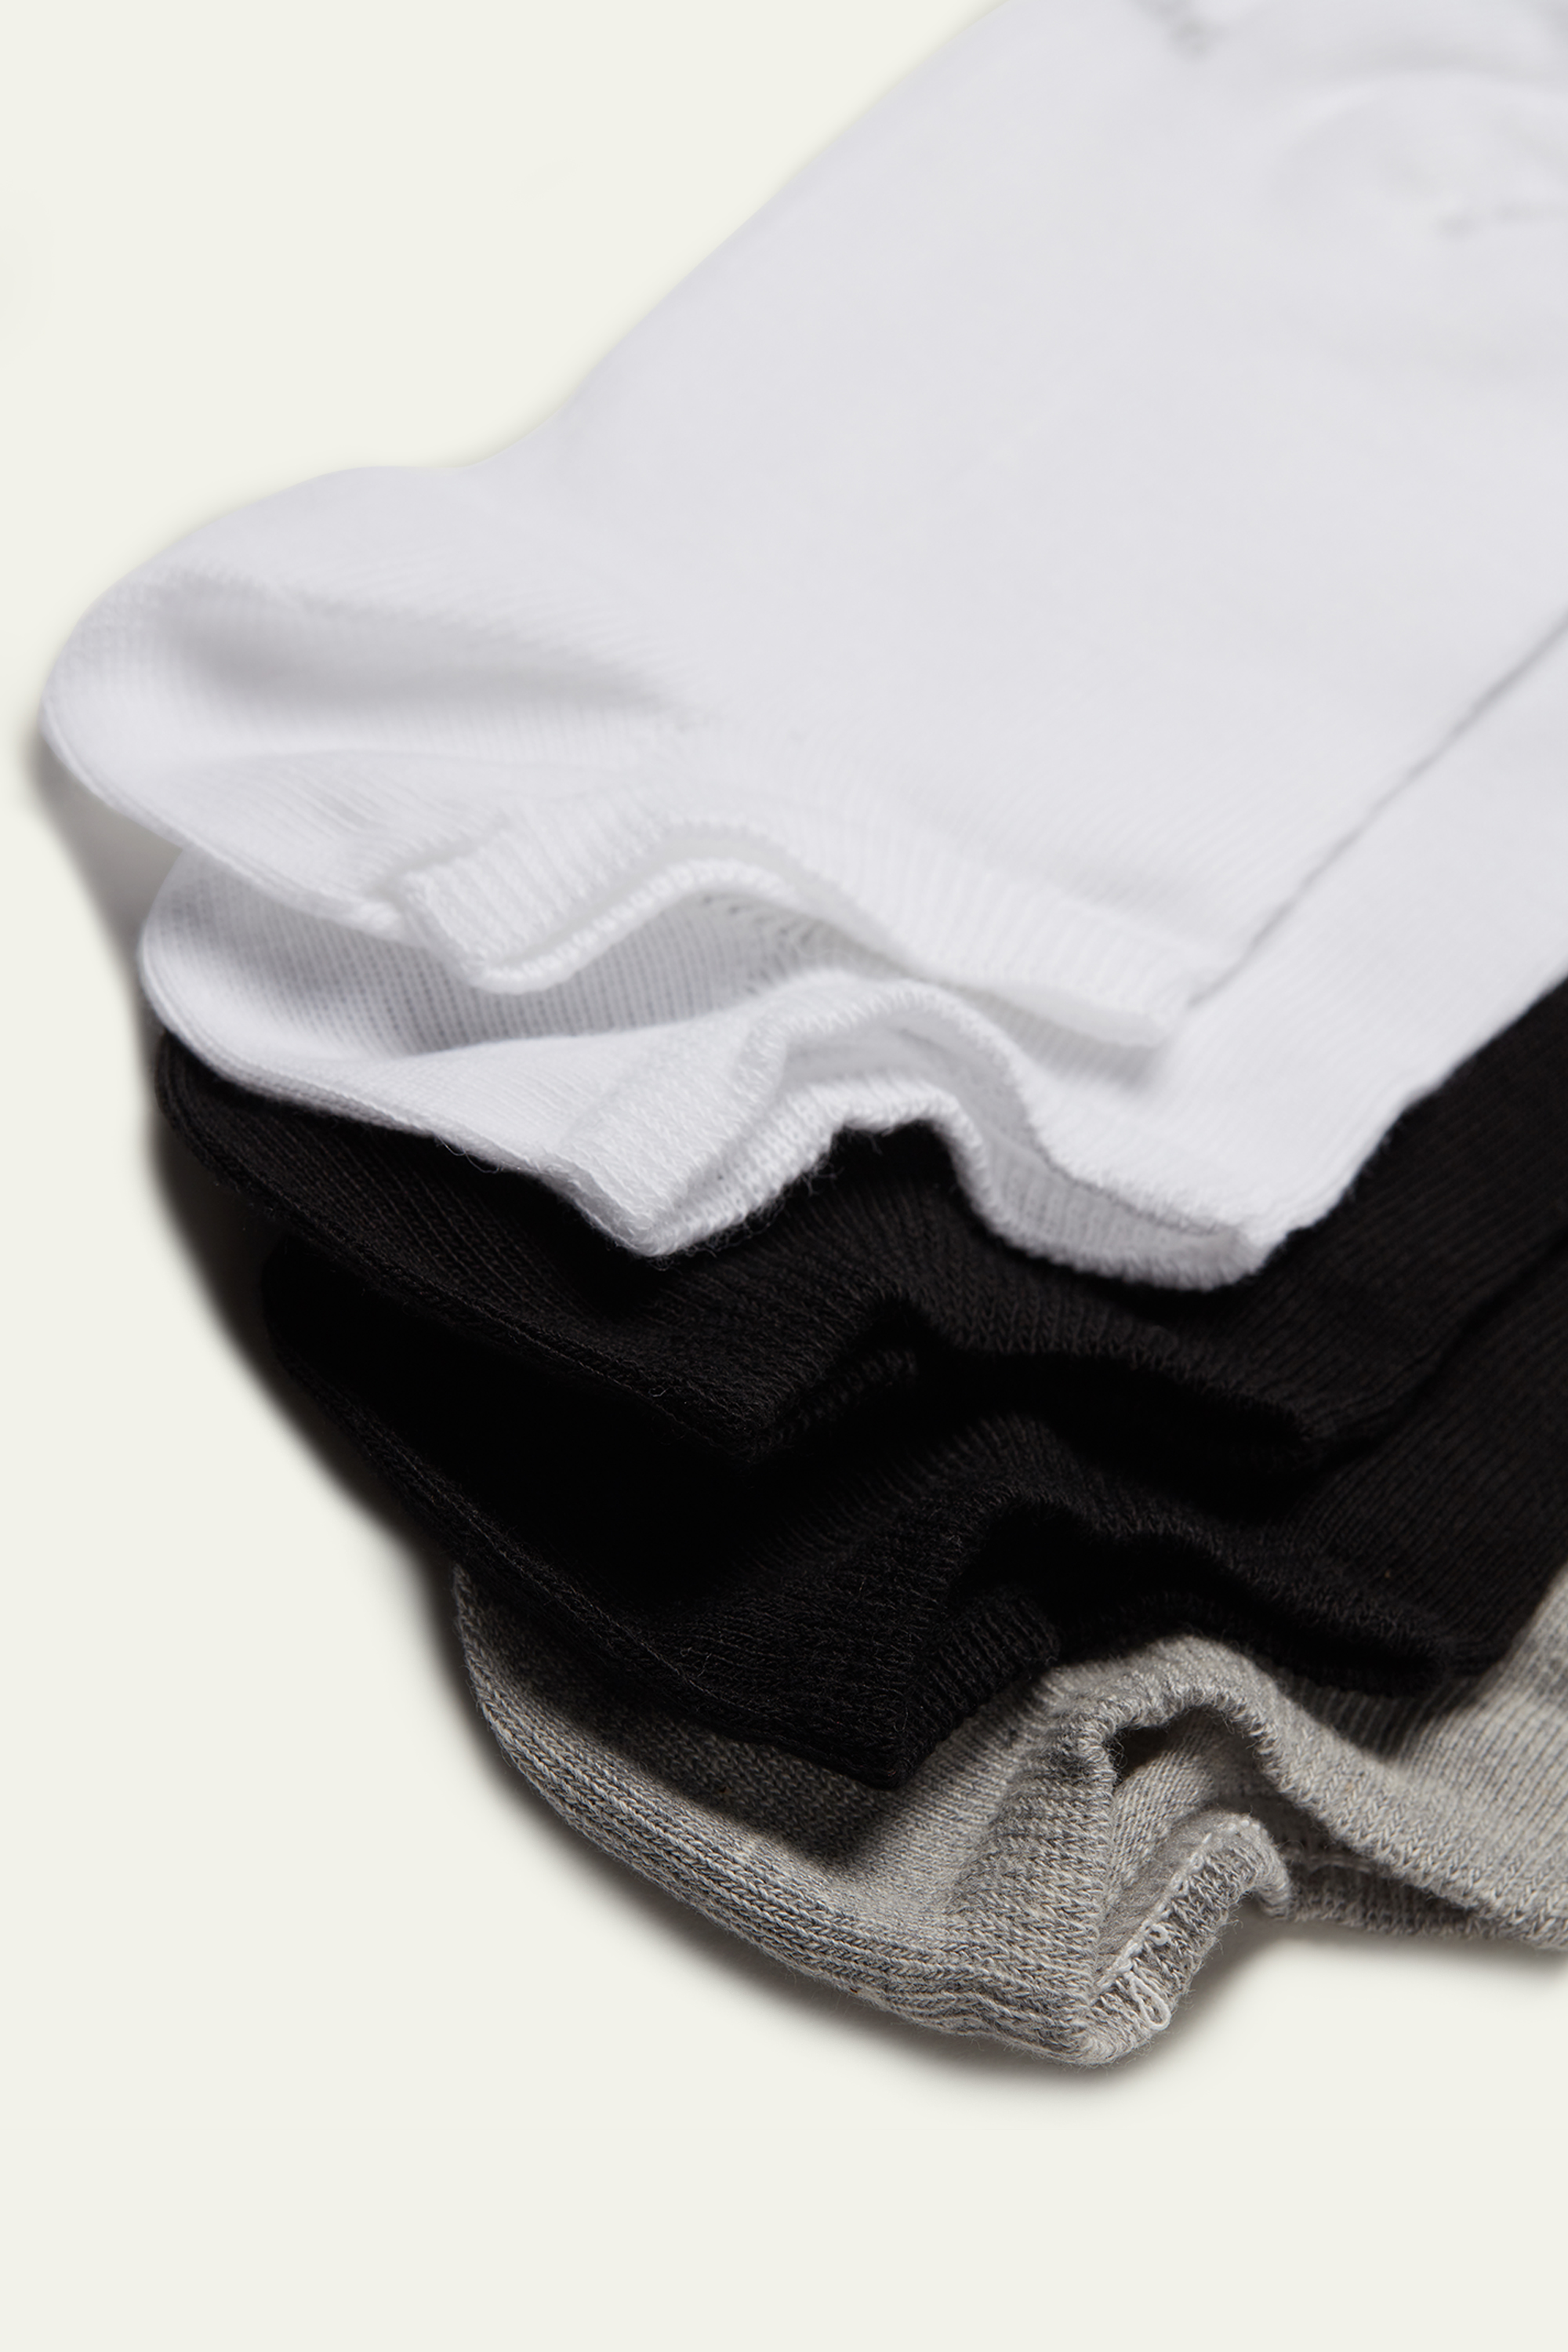 5 Párů Nízkých Jednobarevných Ponožek z Bavlny